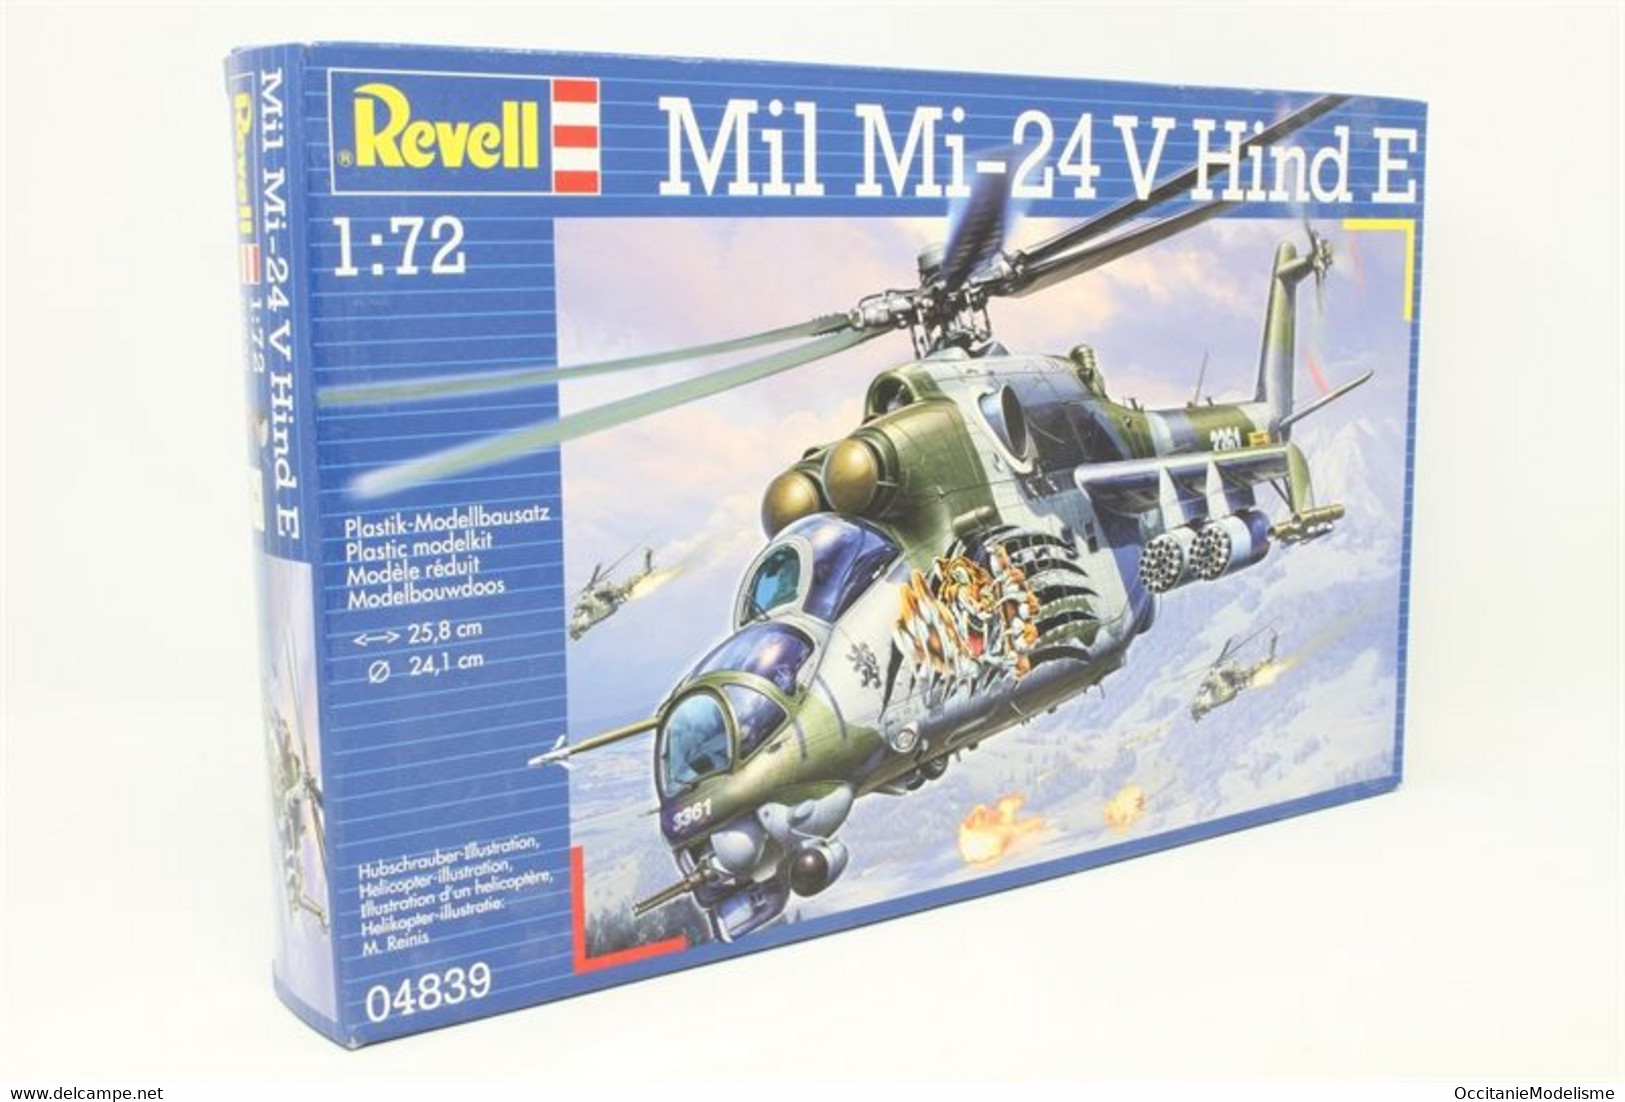 Revell - MIL Mi-24 V Hind E Maquette Hélicoptère Kit Plastique Réf. 04839 Neuf NBO 1/72 - Elicotteri